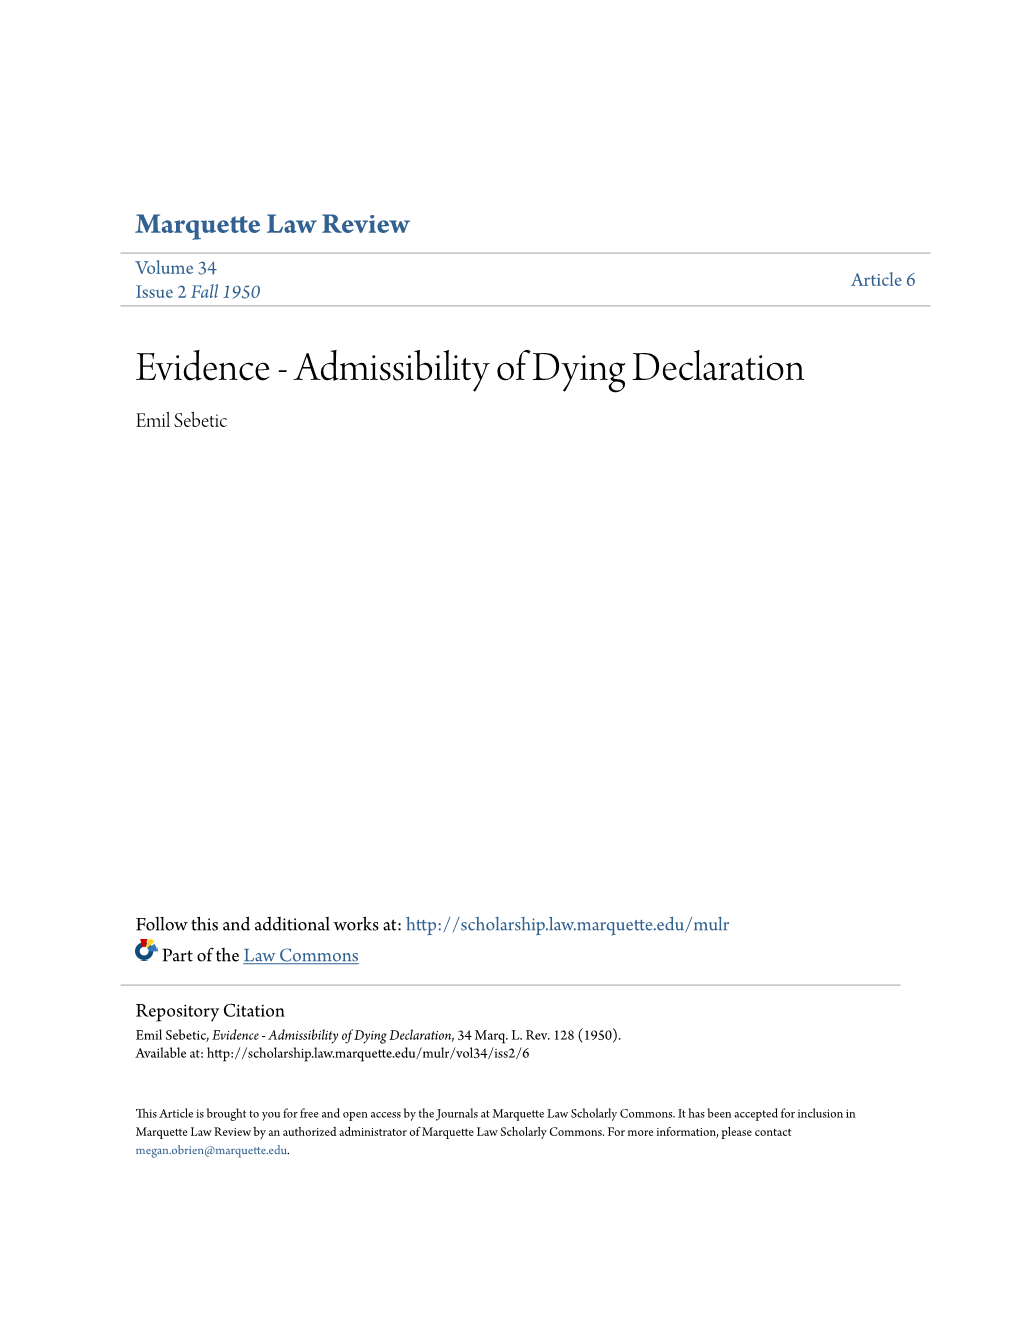 Admissibility of Dying Declaration Emil Sebetic